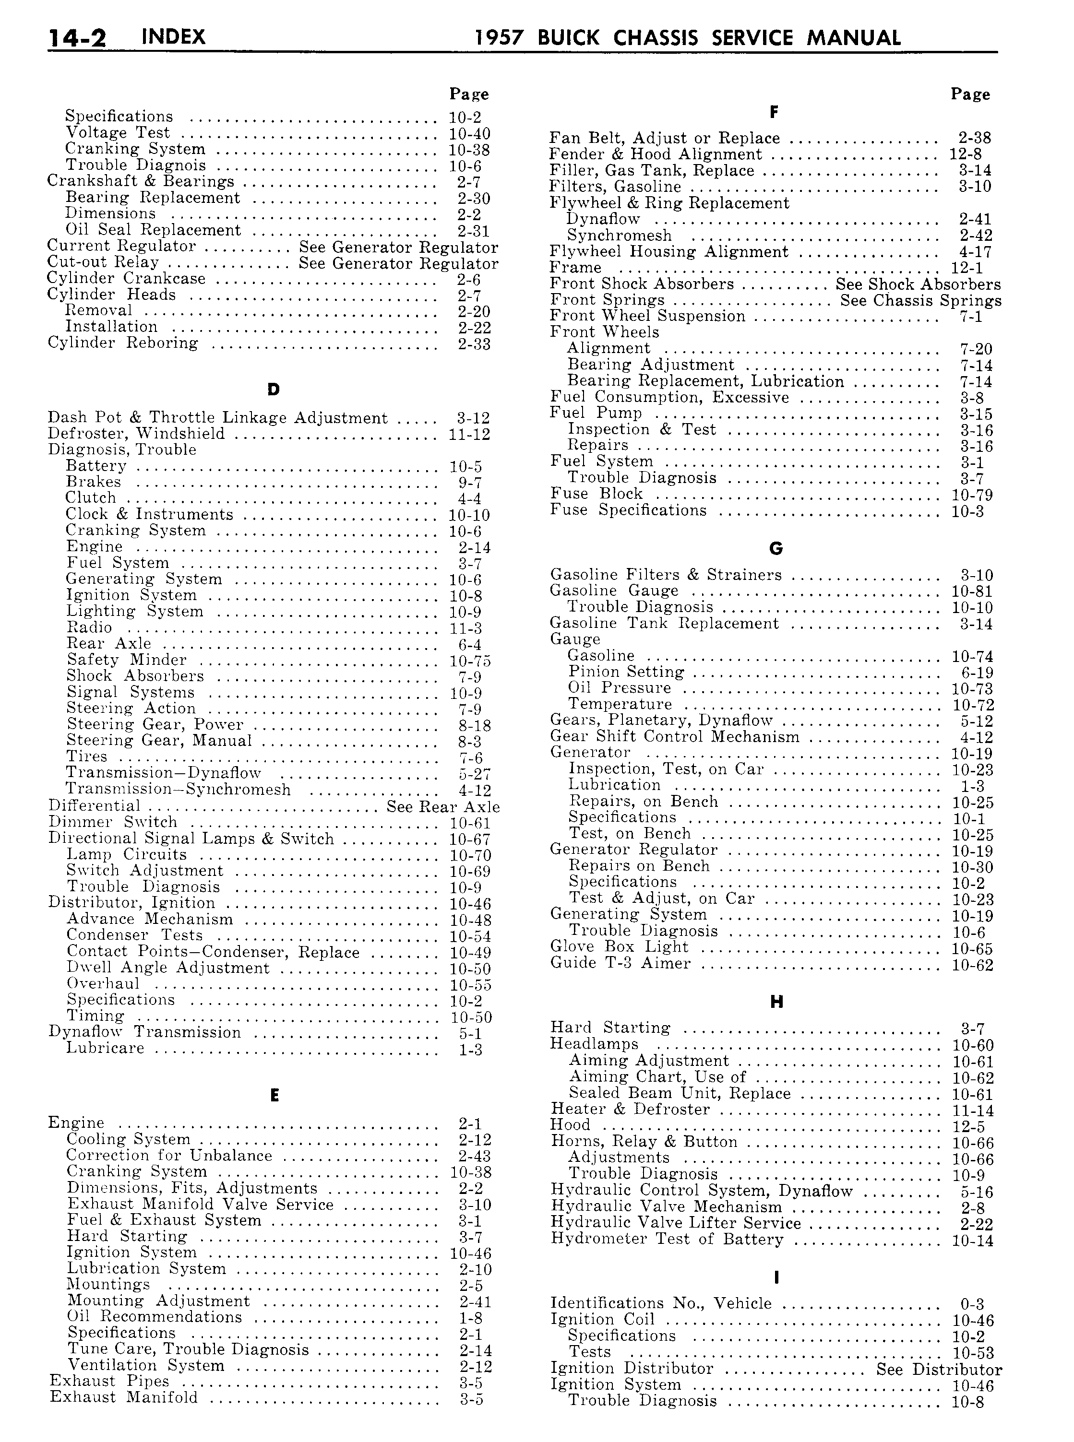 n_14 1957 Buick Shop Manual - Index-002-002.jpg